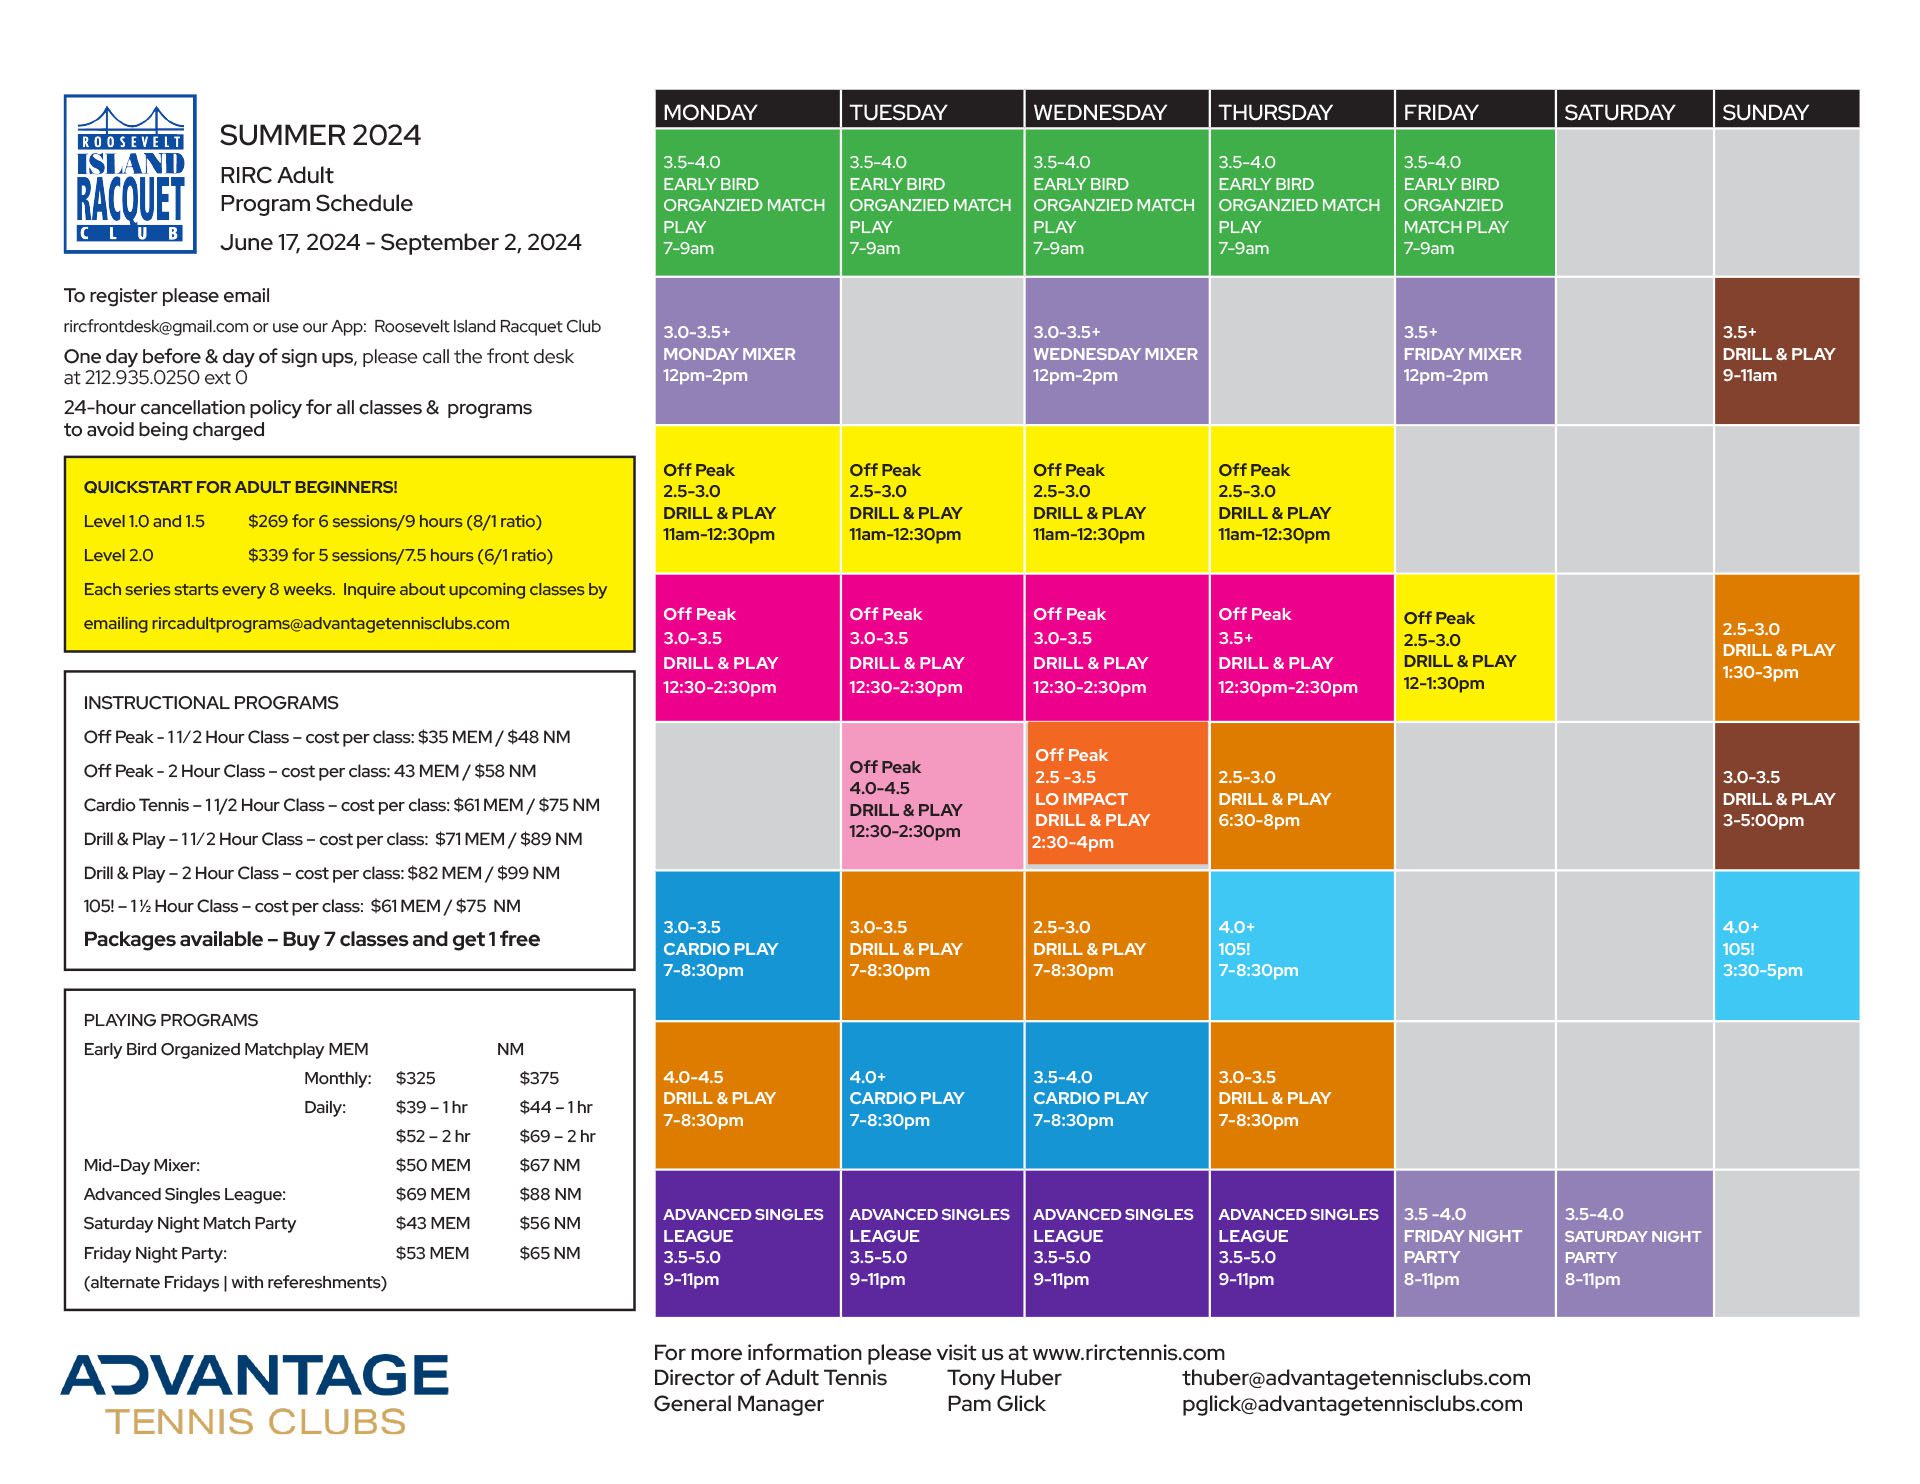 Roosevelt Island Adult Program Schedule (June – September 2024)